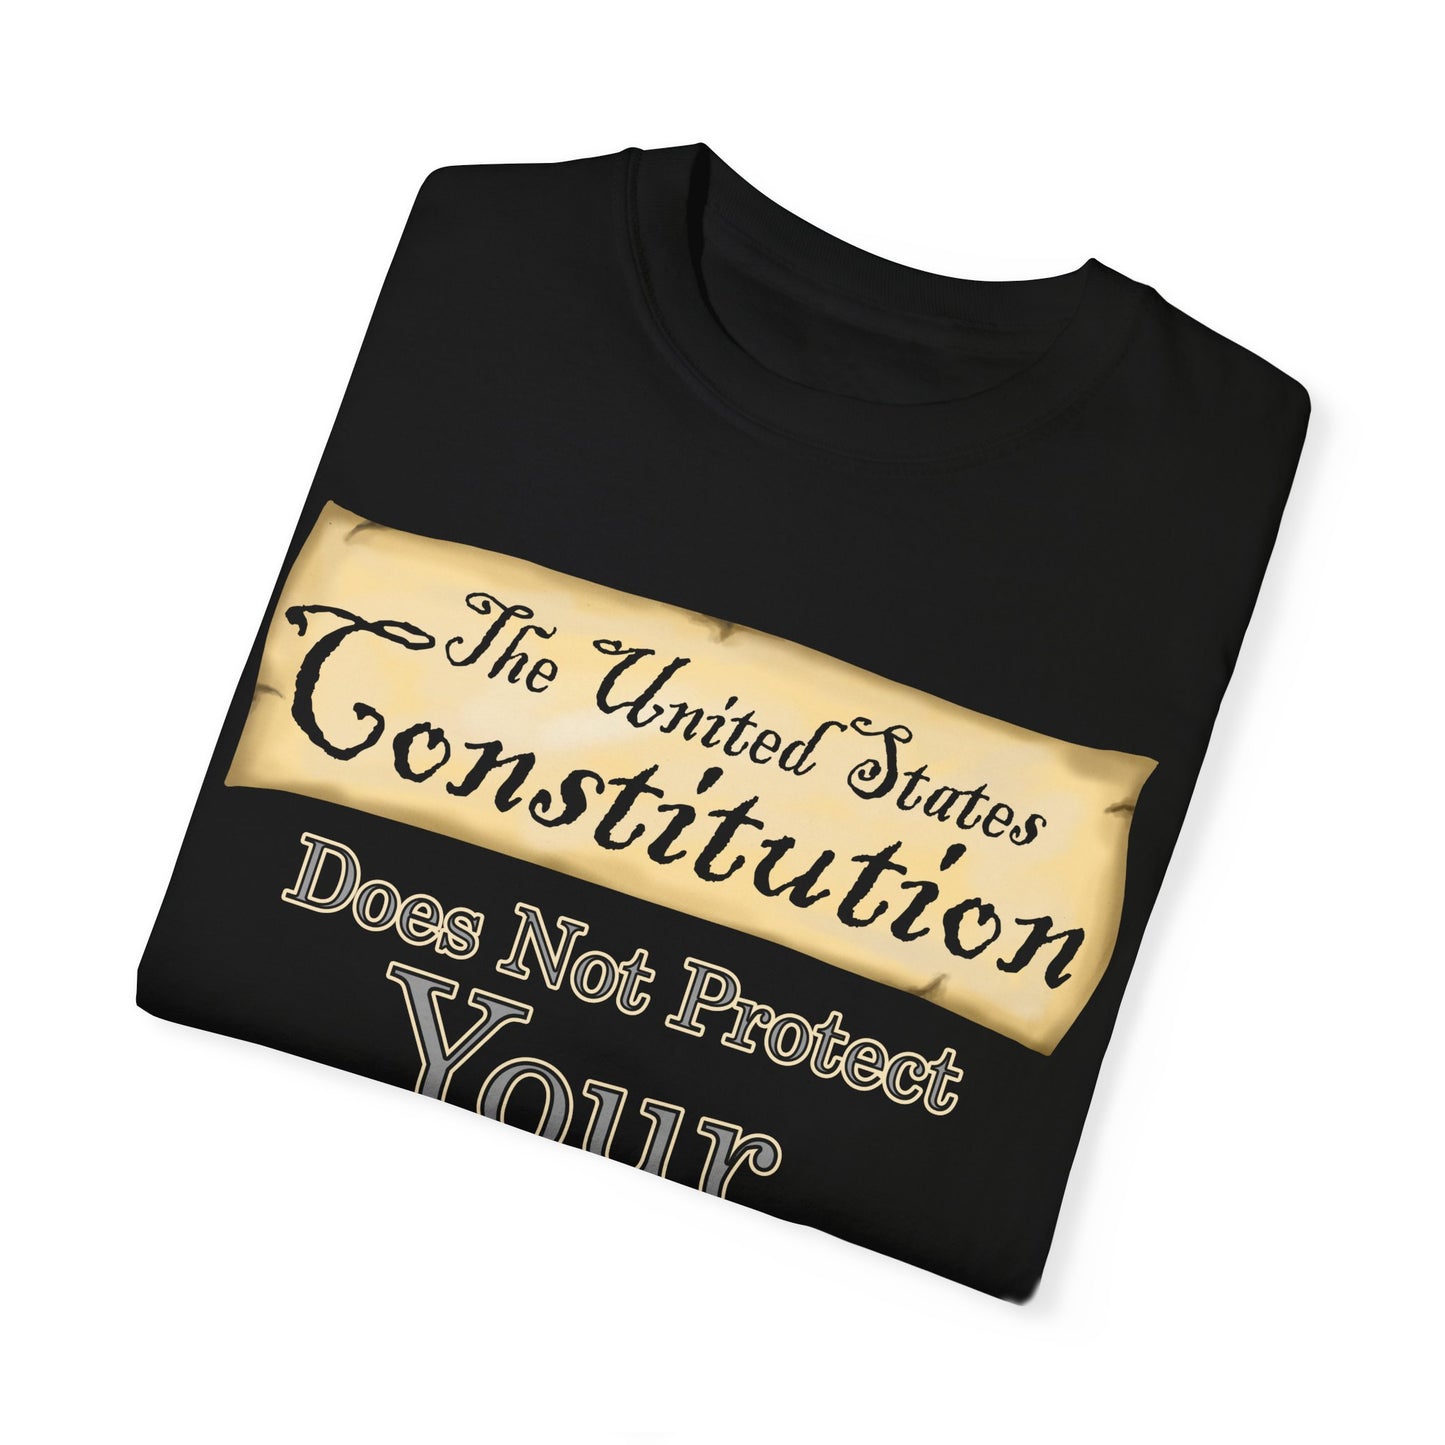 "Constitution" T-shirt